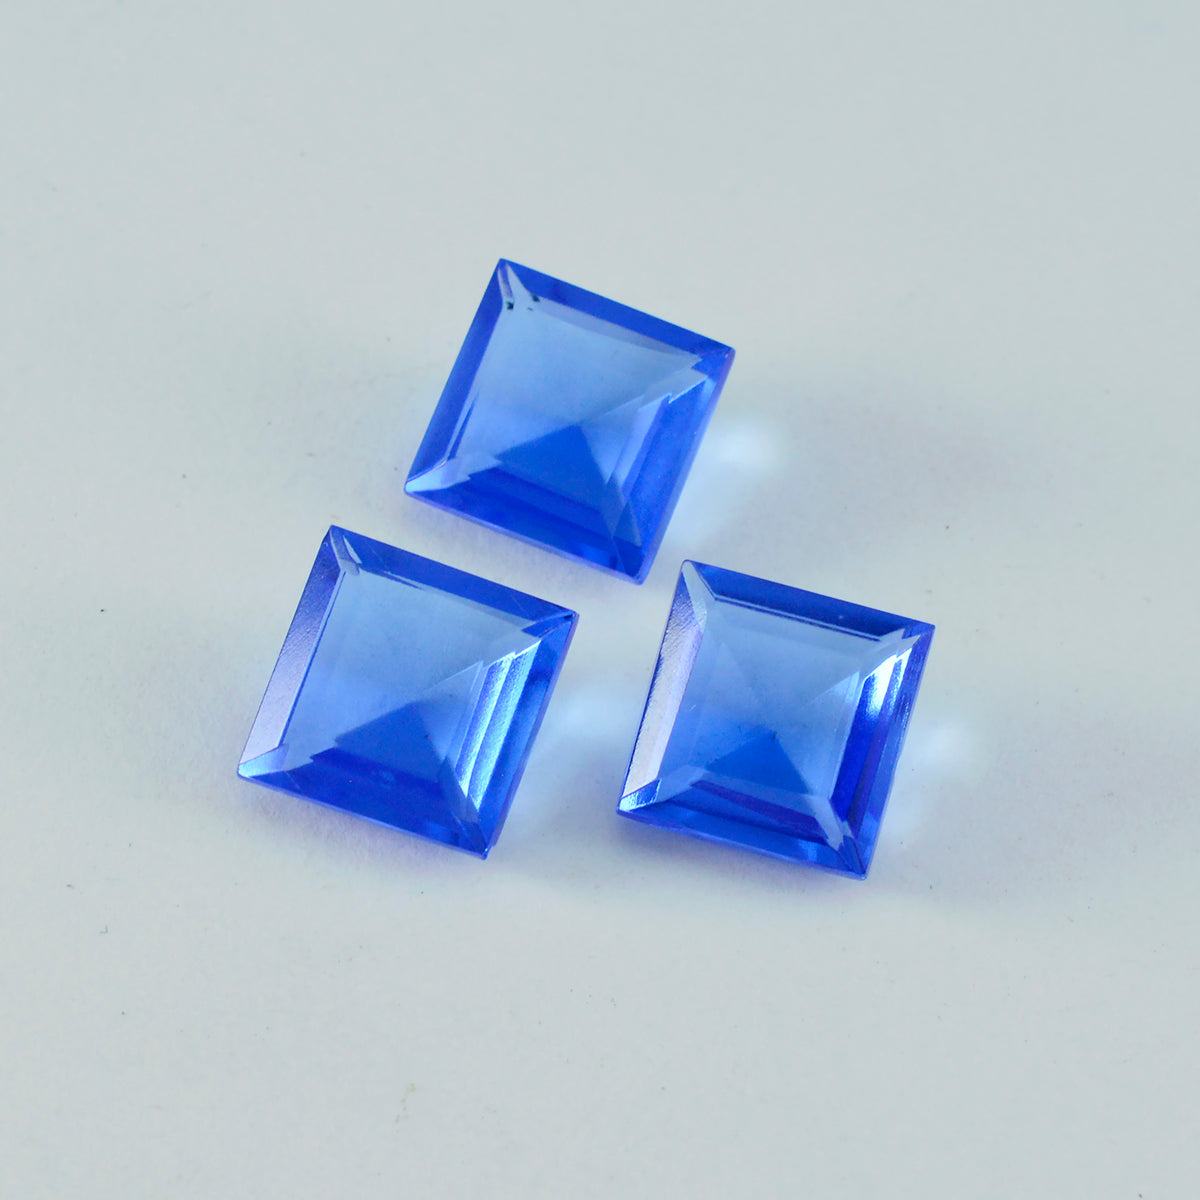 Riyogems 1PC blauwe saffier CZ gefacetteerd 14x14 mm vierkante vorm mooie kwaliteit edelsteen